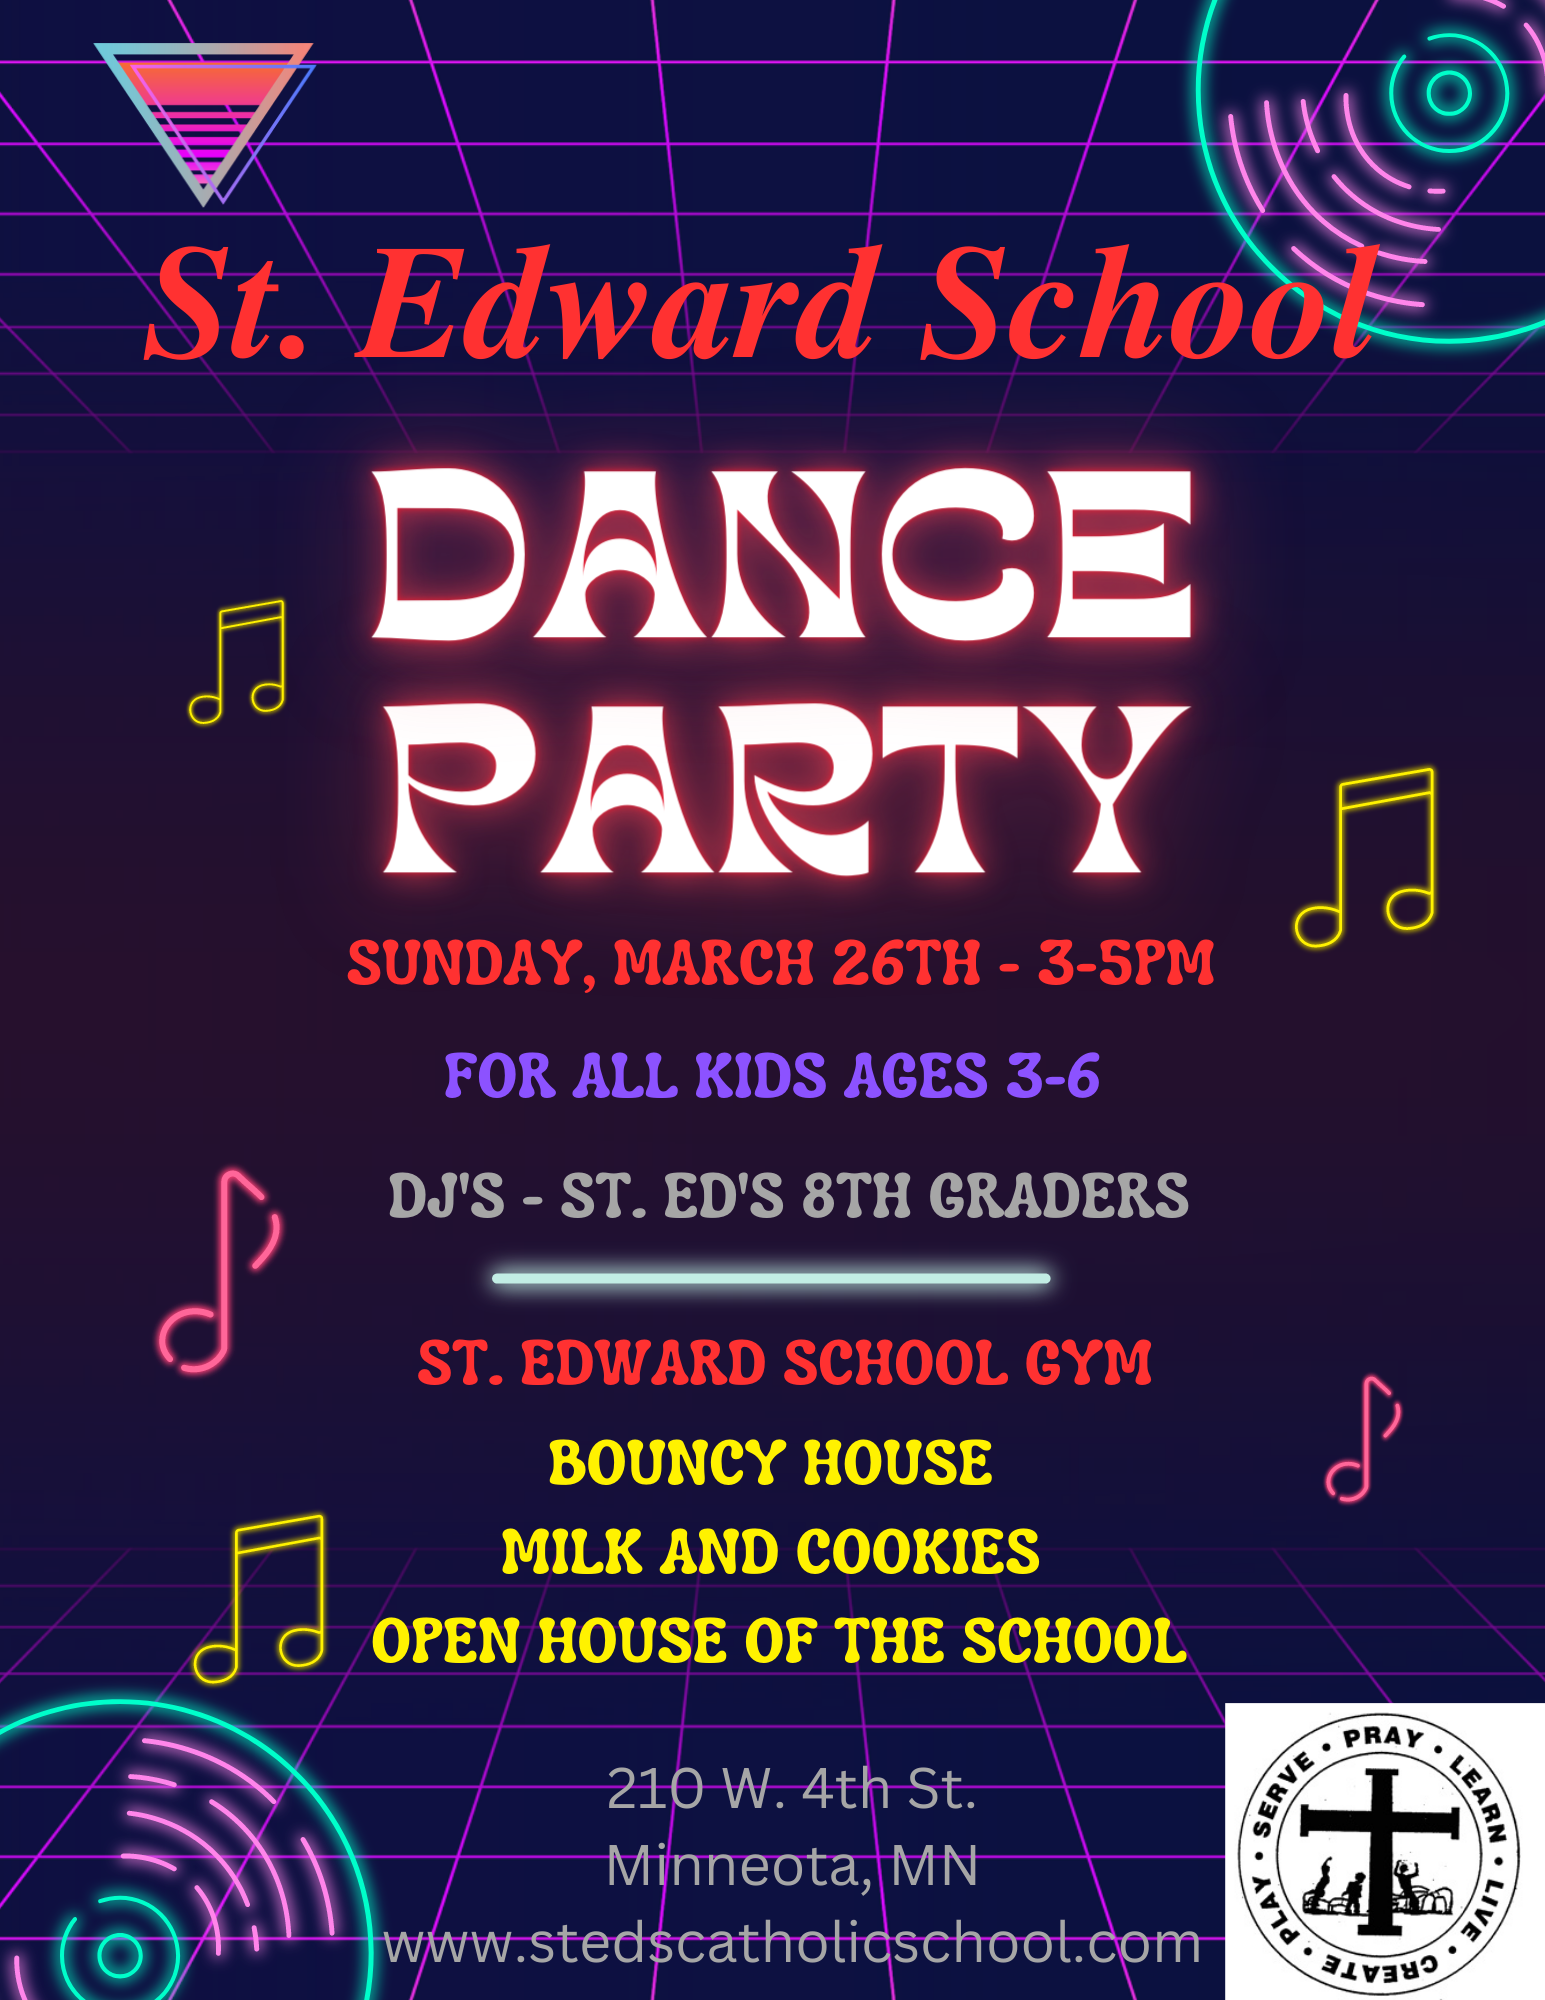 Dance party flyer